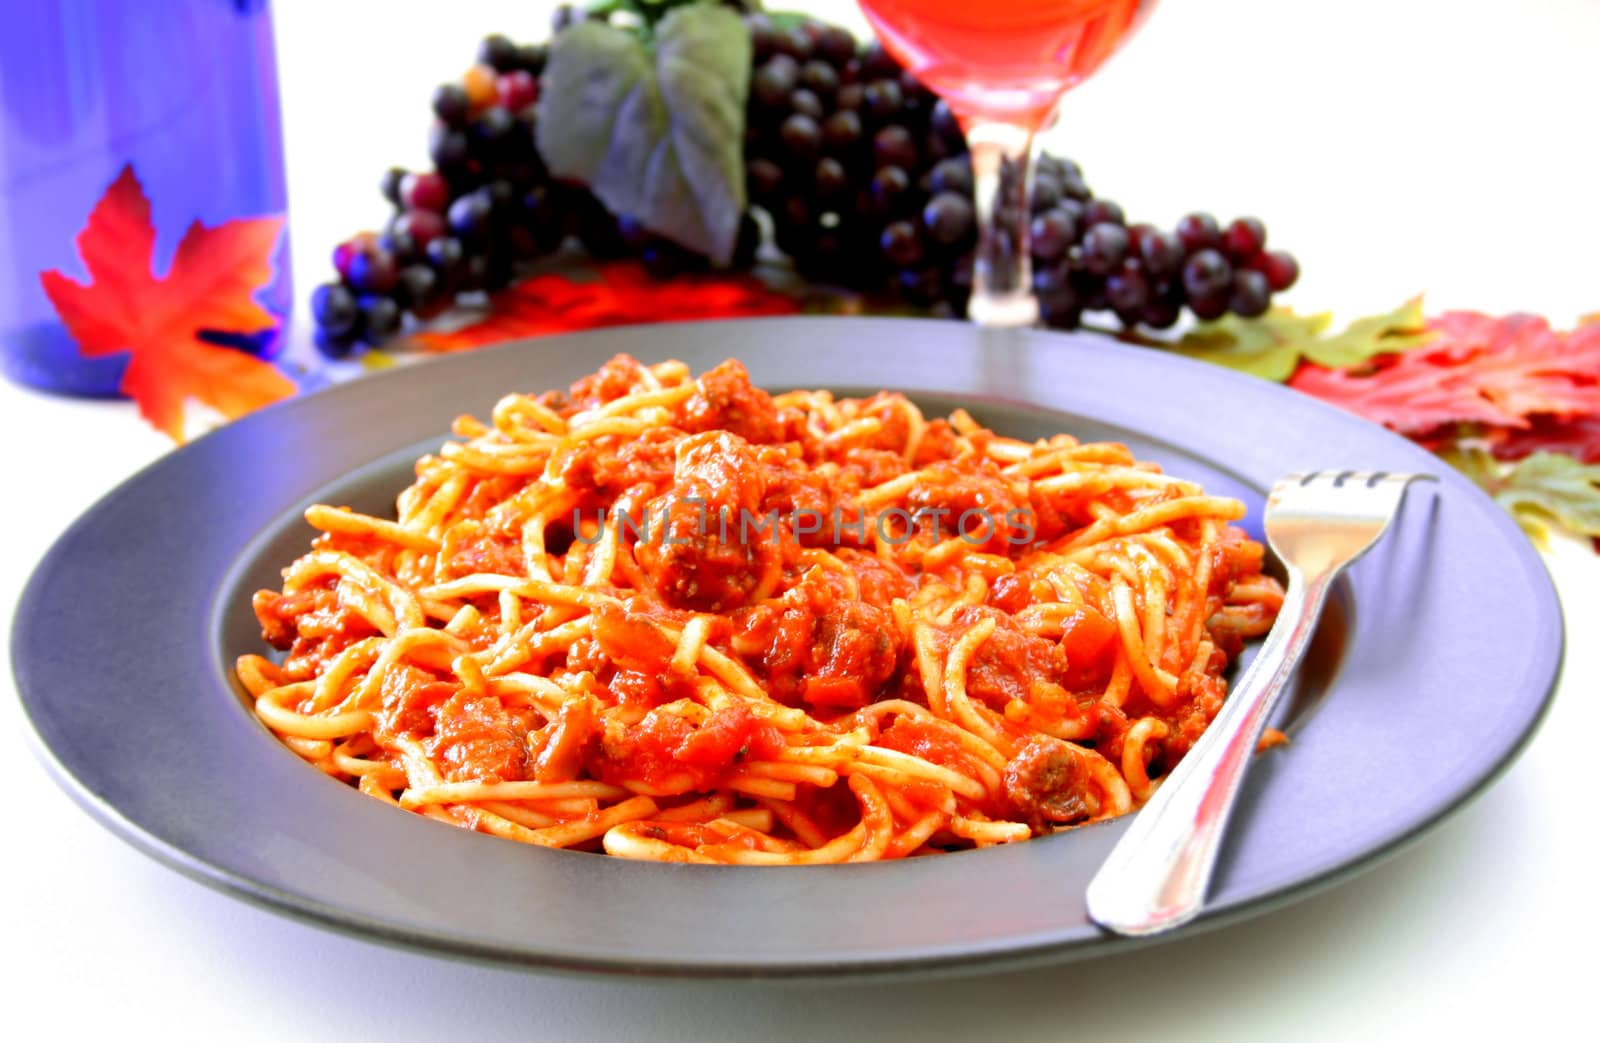 Spaghetti Dinner by thephotoguy